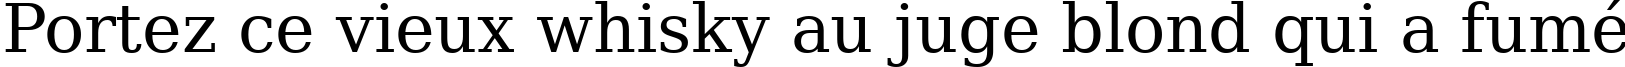 Пример написания шрифтом ae_Japan текста на французском